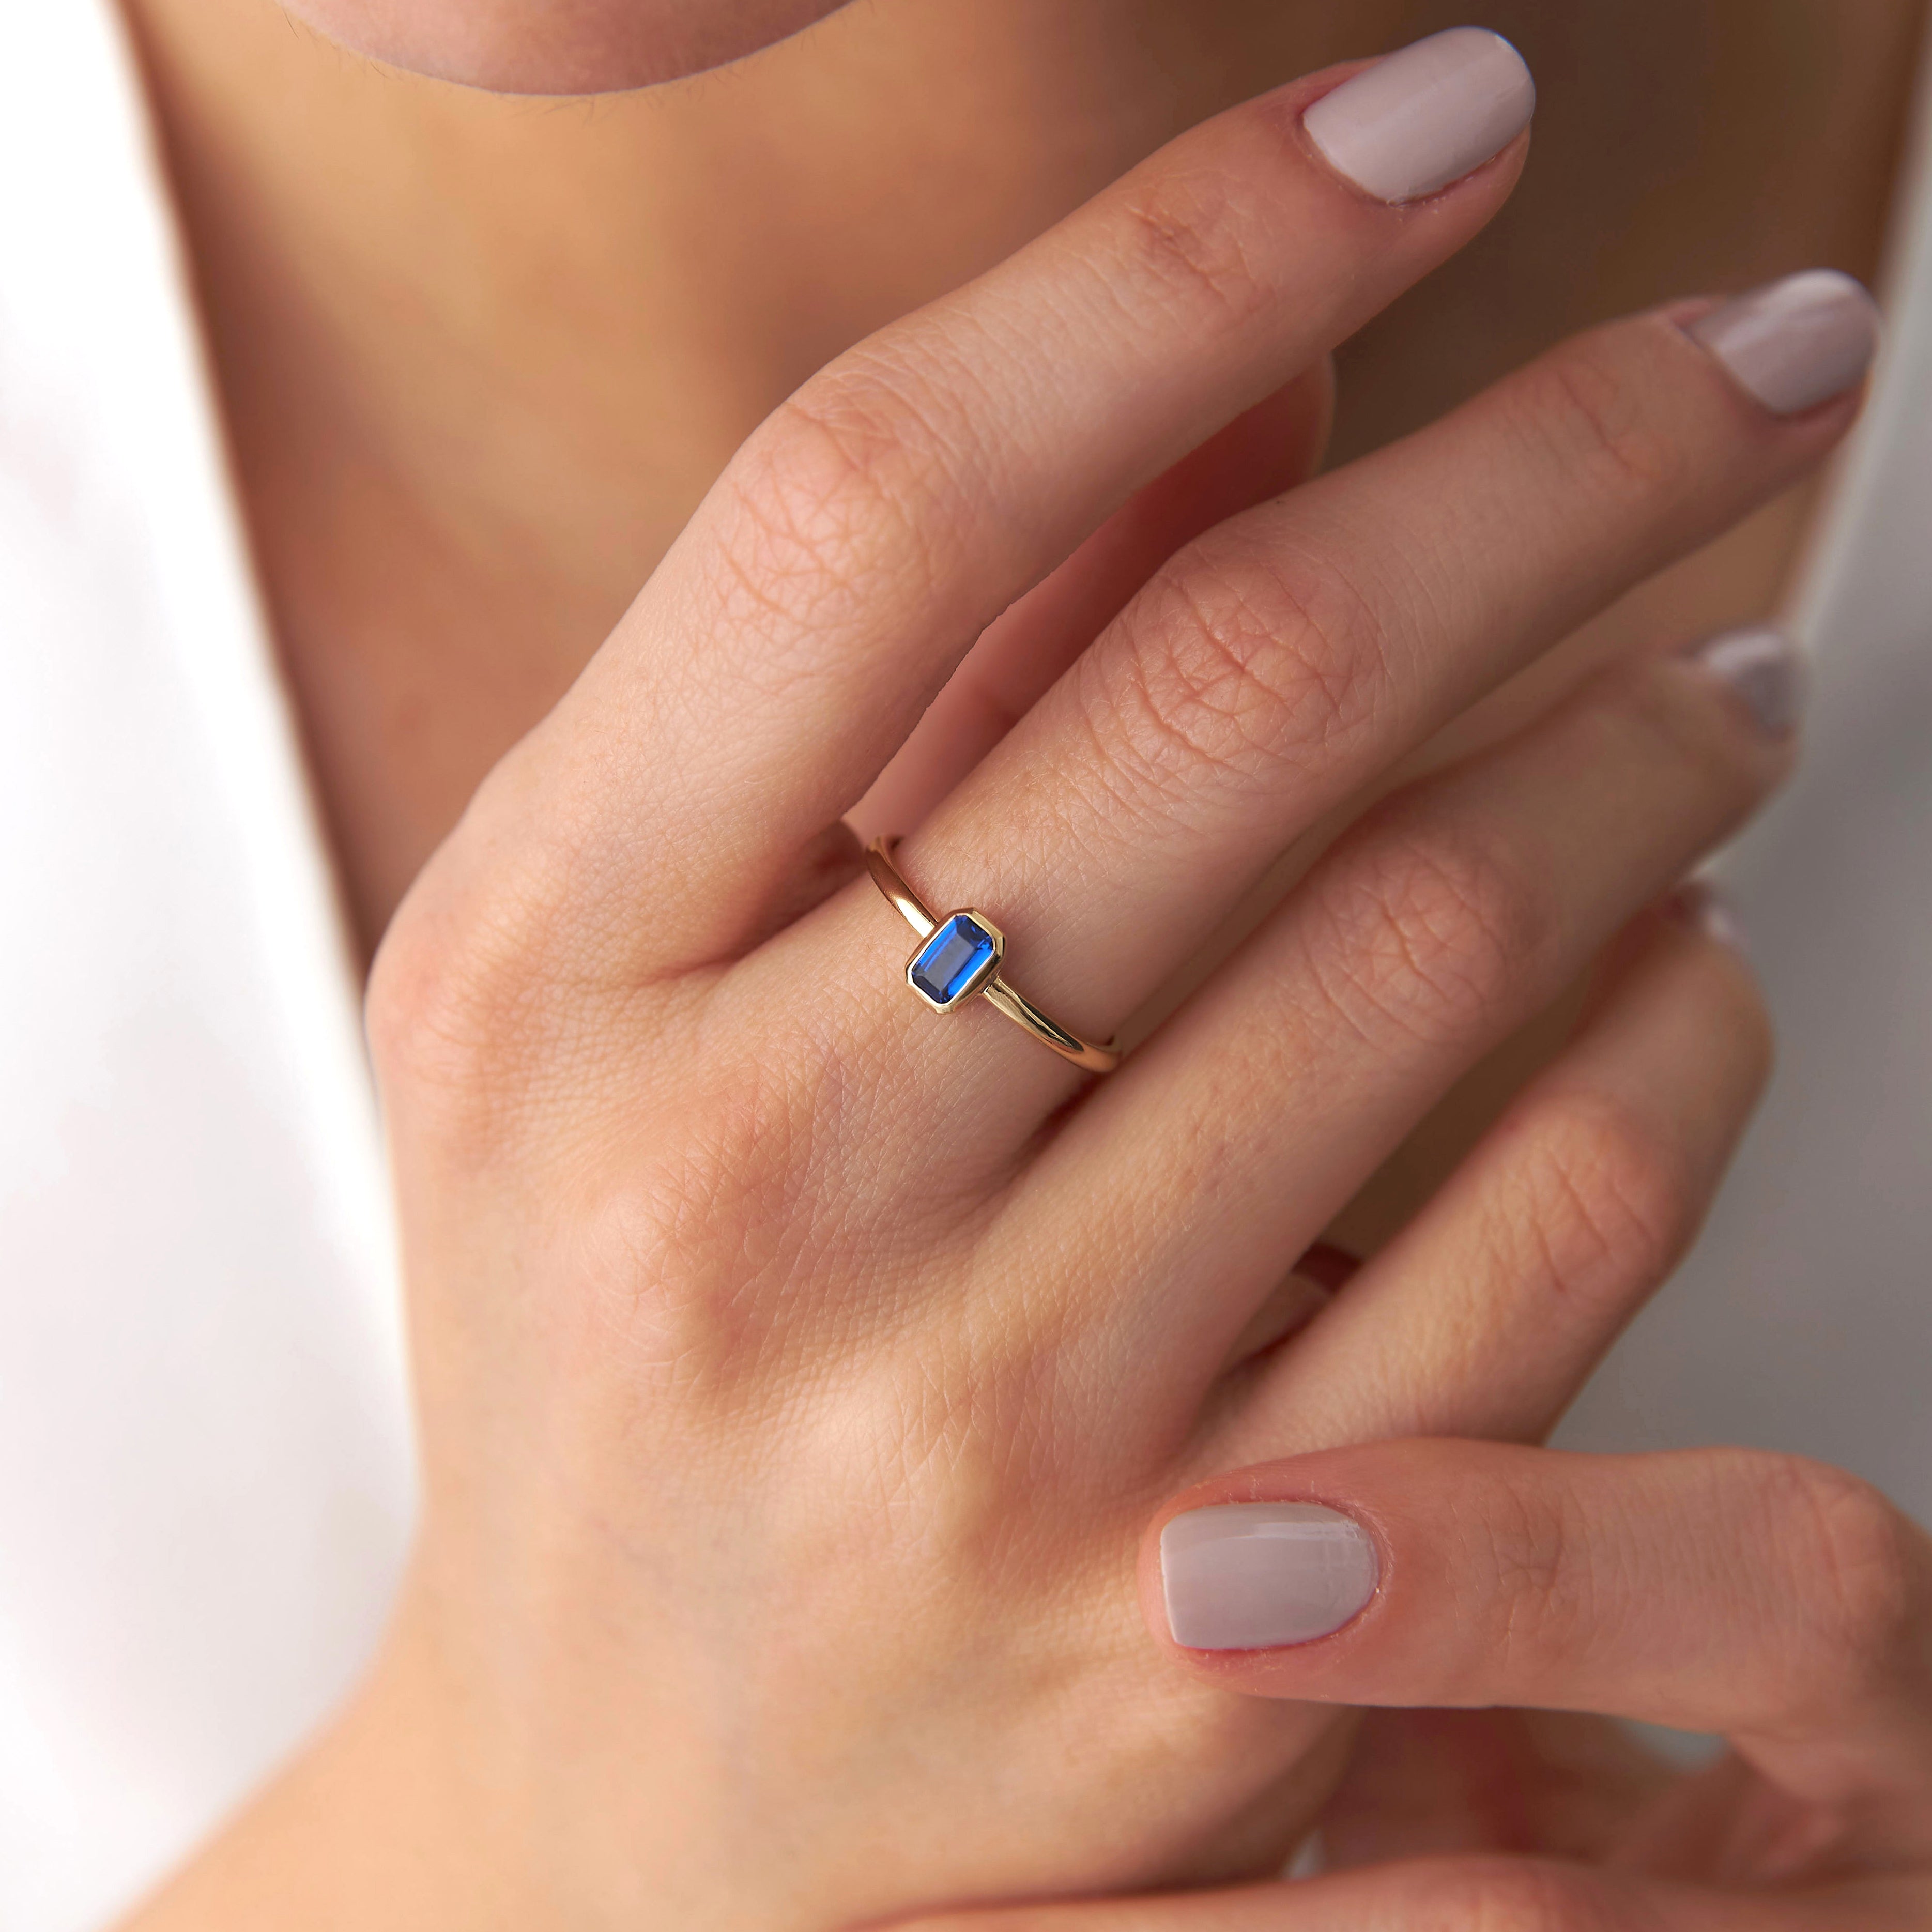 Emerald Cut Blue Gemstone Ring in 14K Gold